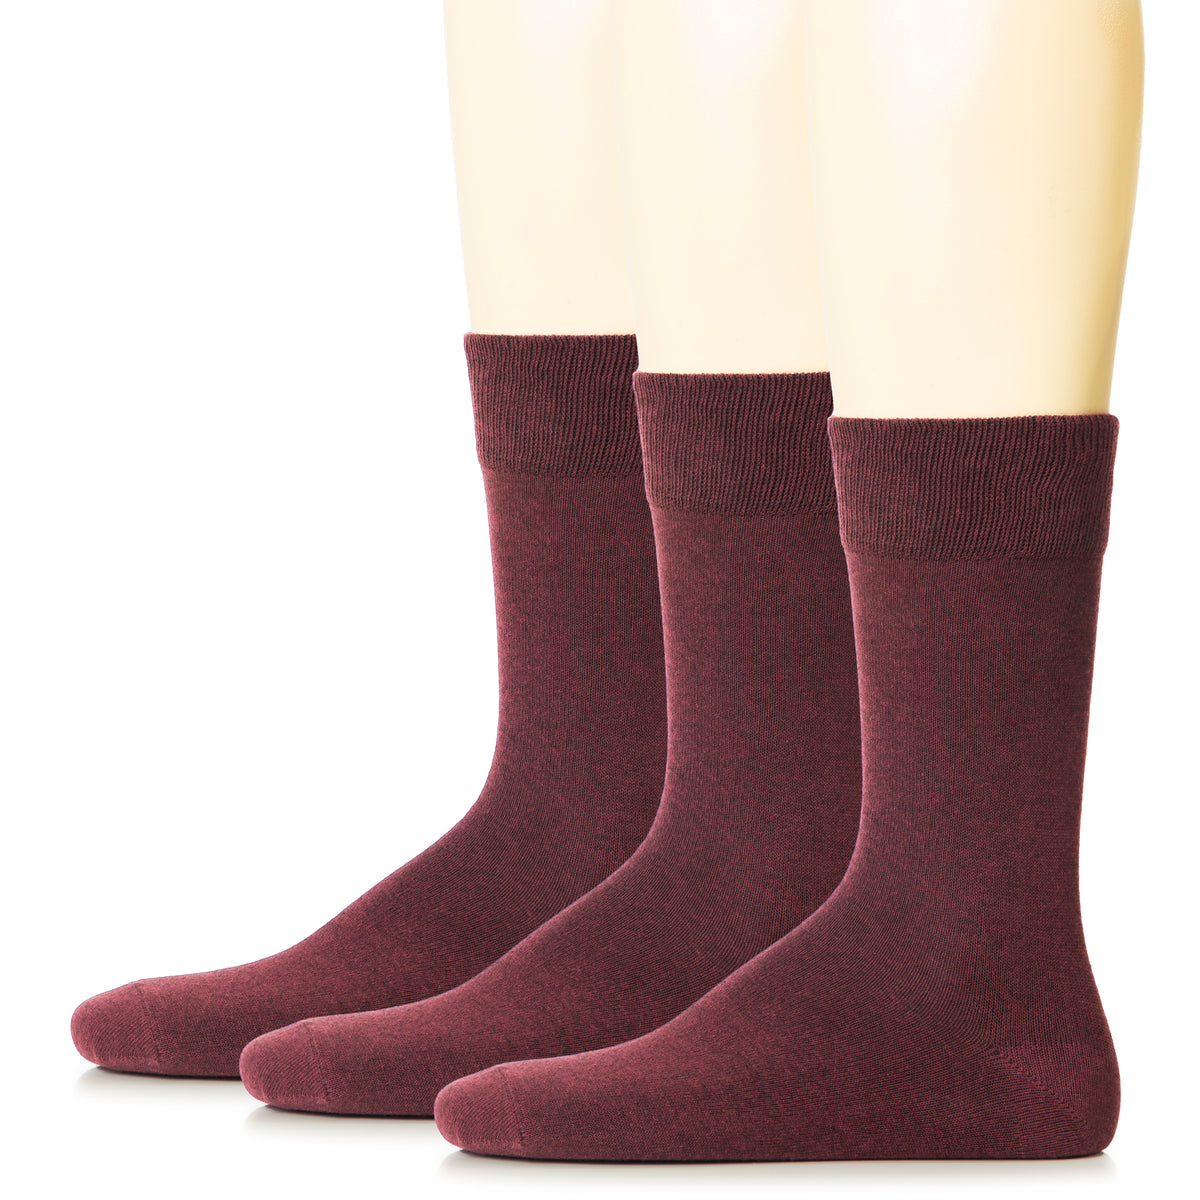 Hugh Ugoli Men Cotton Dress Socks XL / L / M / S Sizes, 3 Pairs | Shoe Size: 13-15 | Burgundy